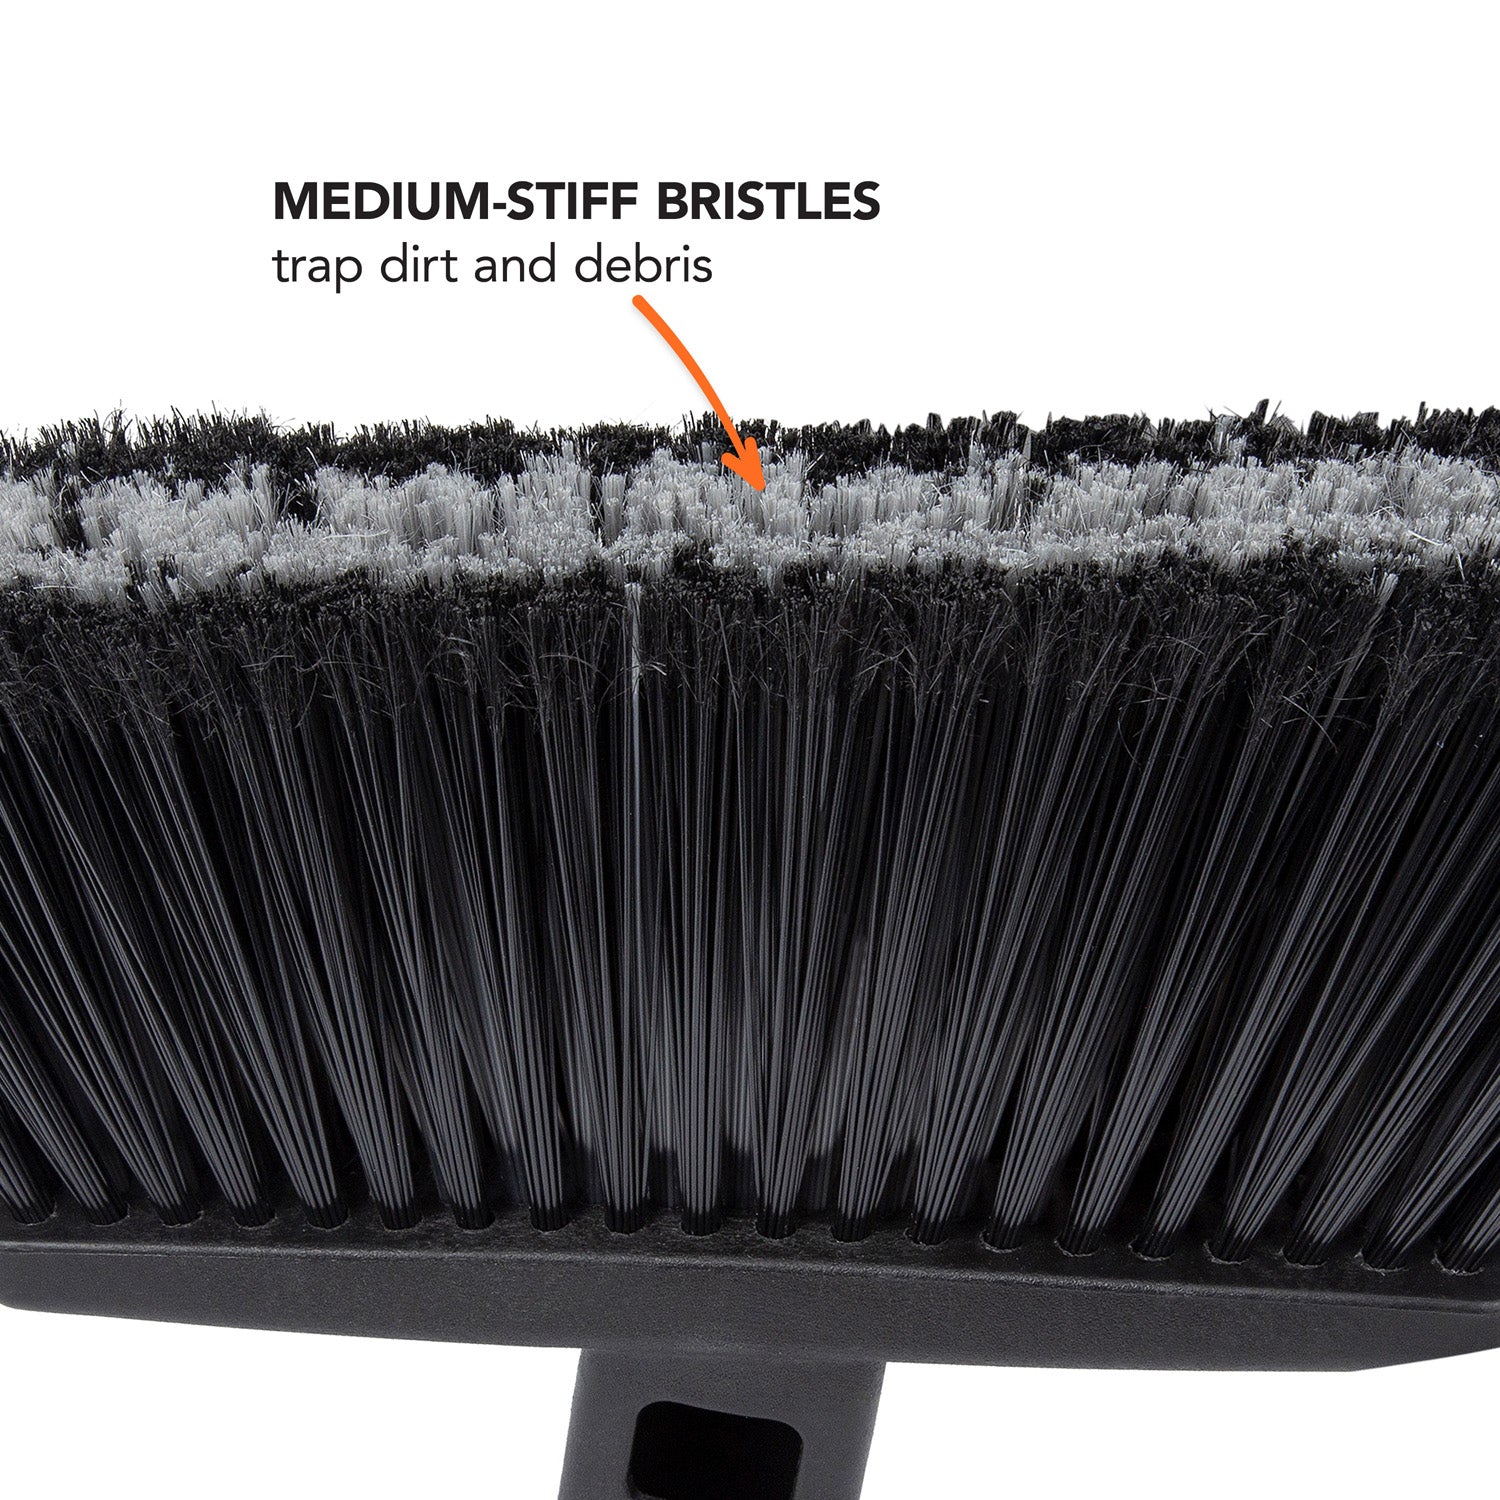 SWOPT Premium Multi-Surface Angle Broom, Cotton Mop + 48” & 60 Eva Foam Comfort Grip Wooden Handles, Combo - Cleaning Heads Wit